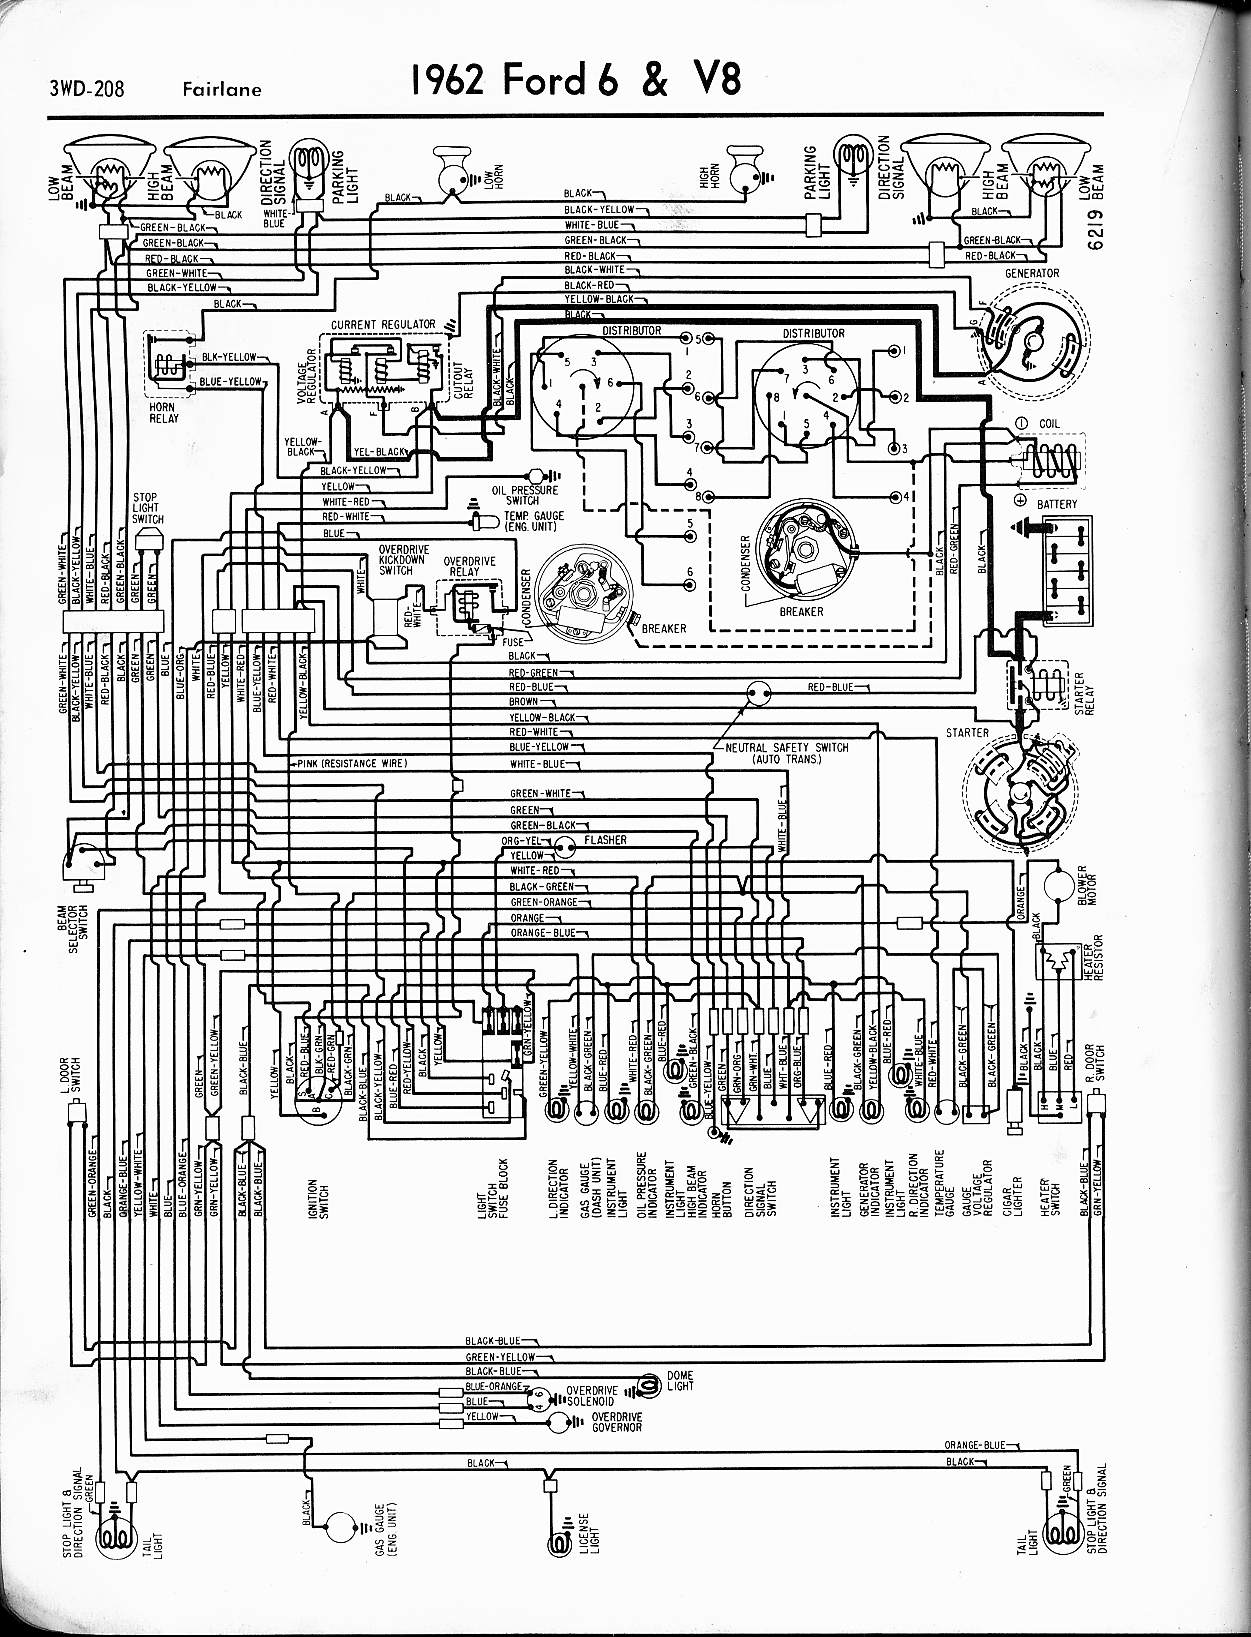 1965 Ford ranchero wiring diagram #1